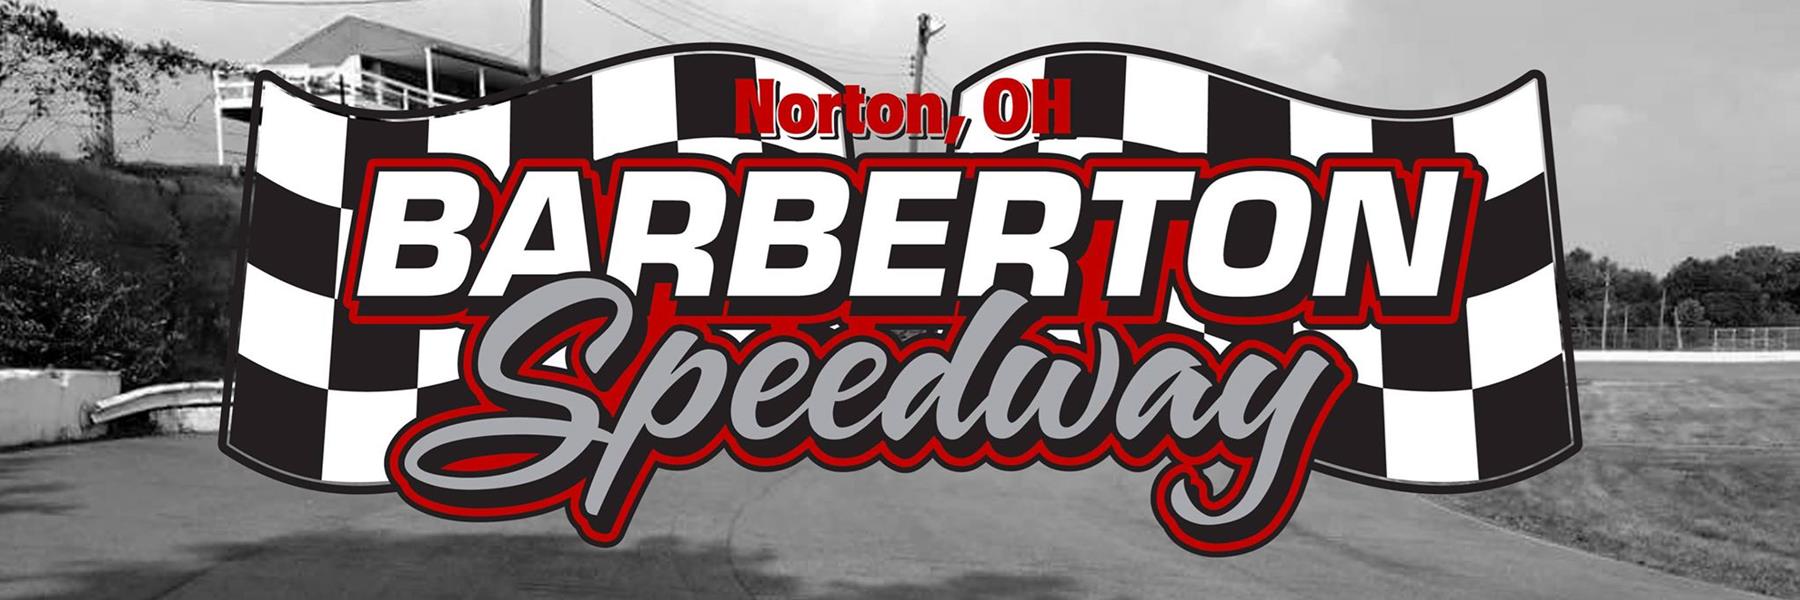 4/17/2021 - Barberton Speedway